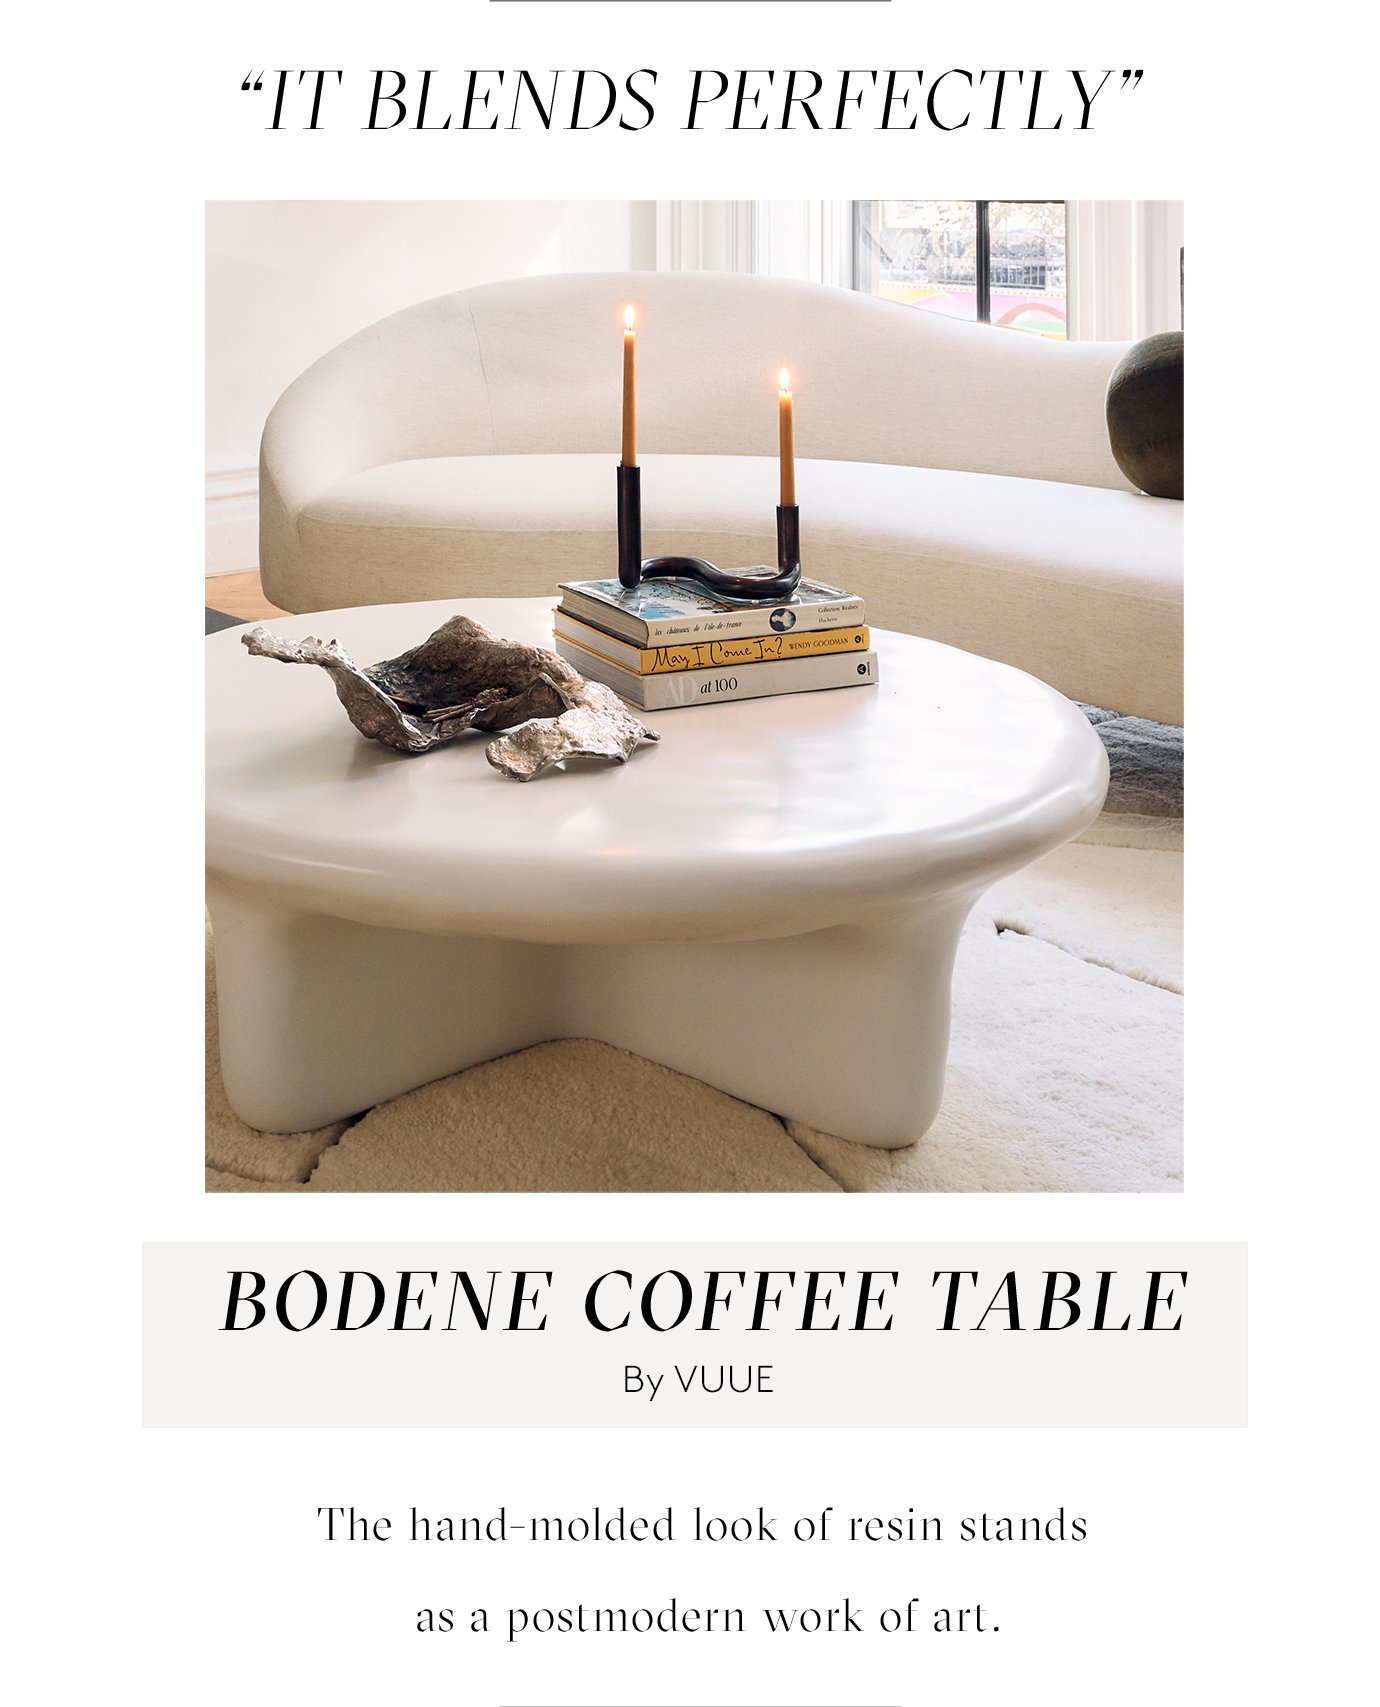 BODENE COFFEE TABLE